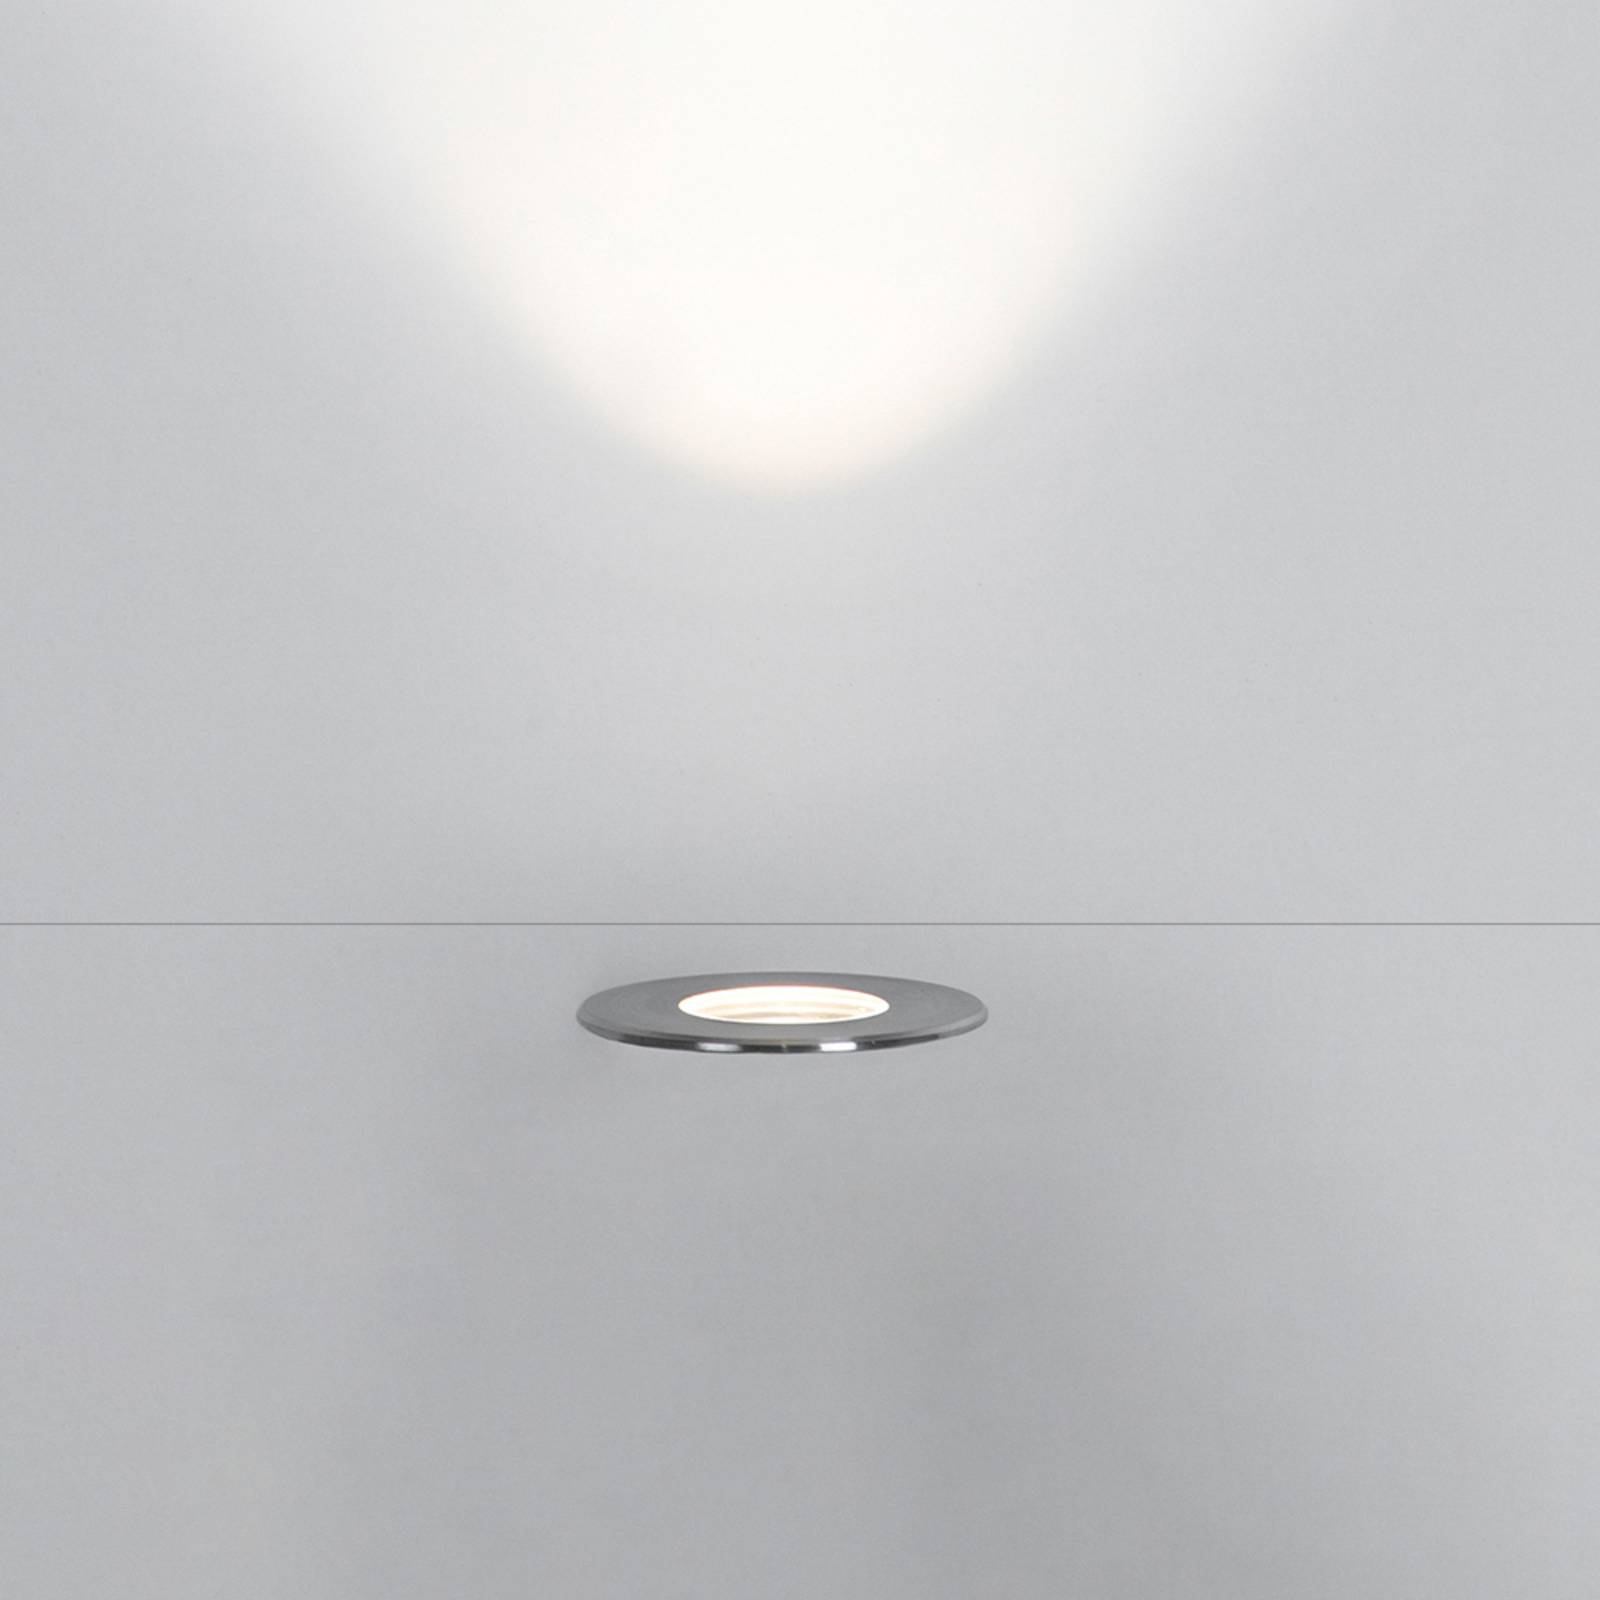 BRUMBERG Boled LED indbygningslampe, Ø 6,4 cm, 6 W